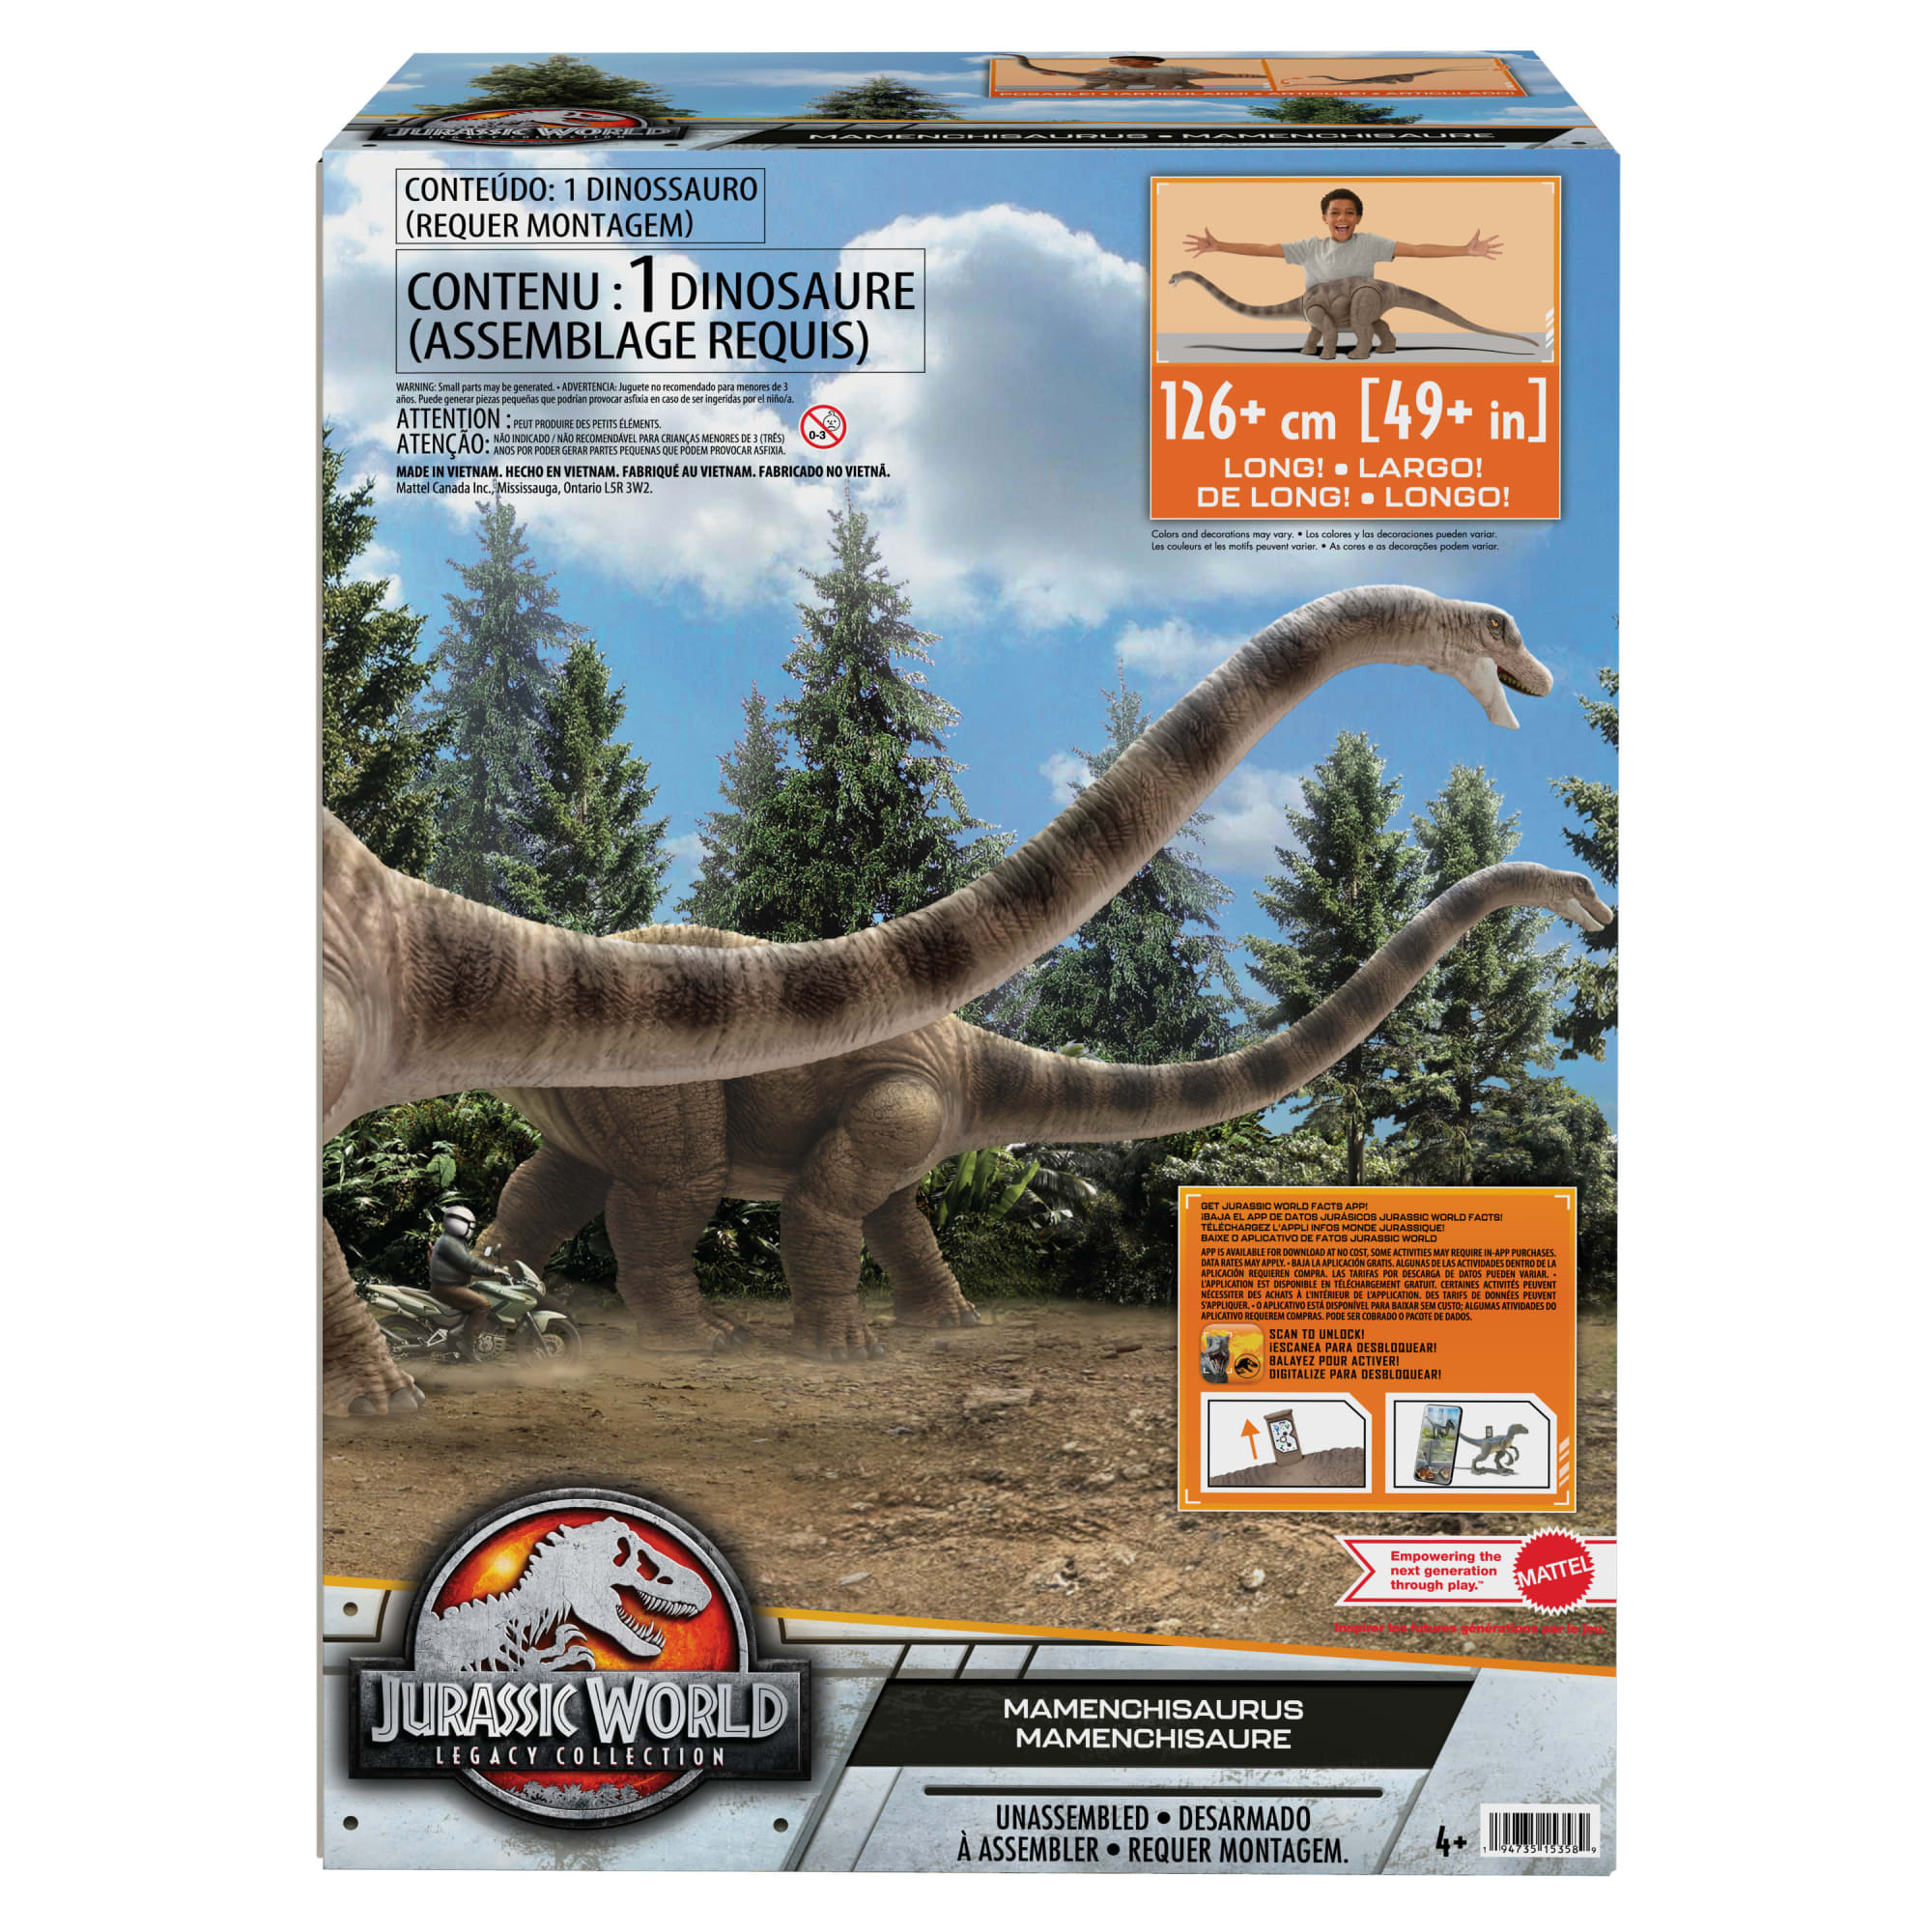 Dinosaurios de Peluche Jurassic World Mosasaurus, Triceraptops, Stygi